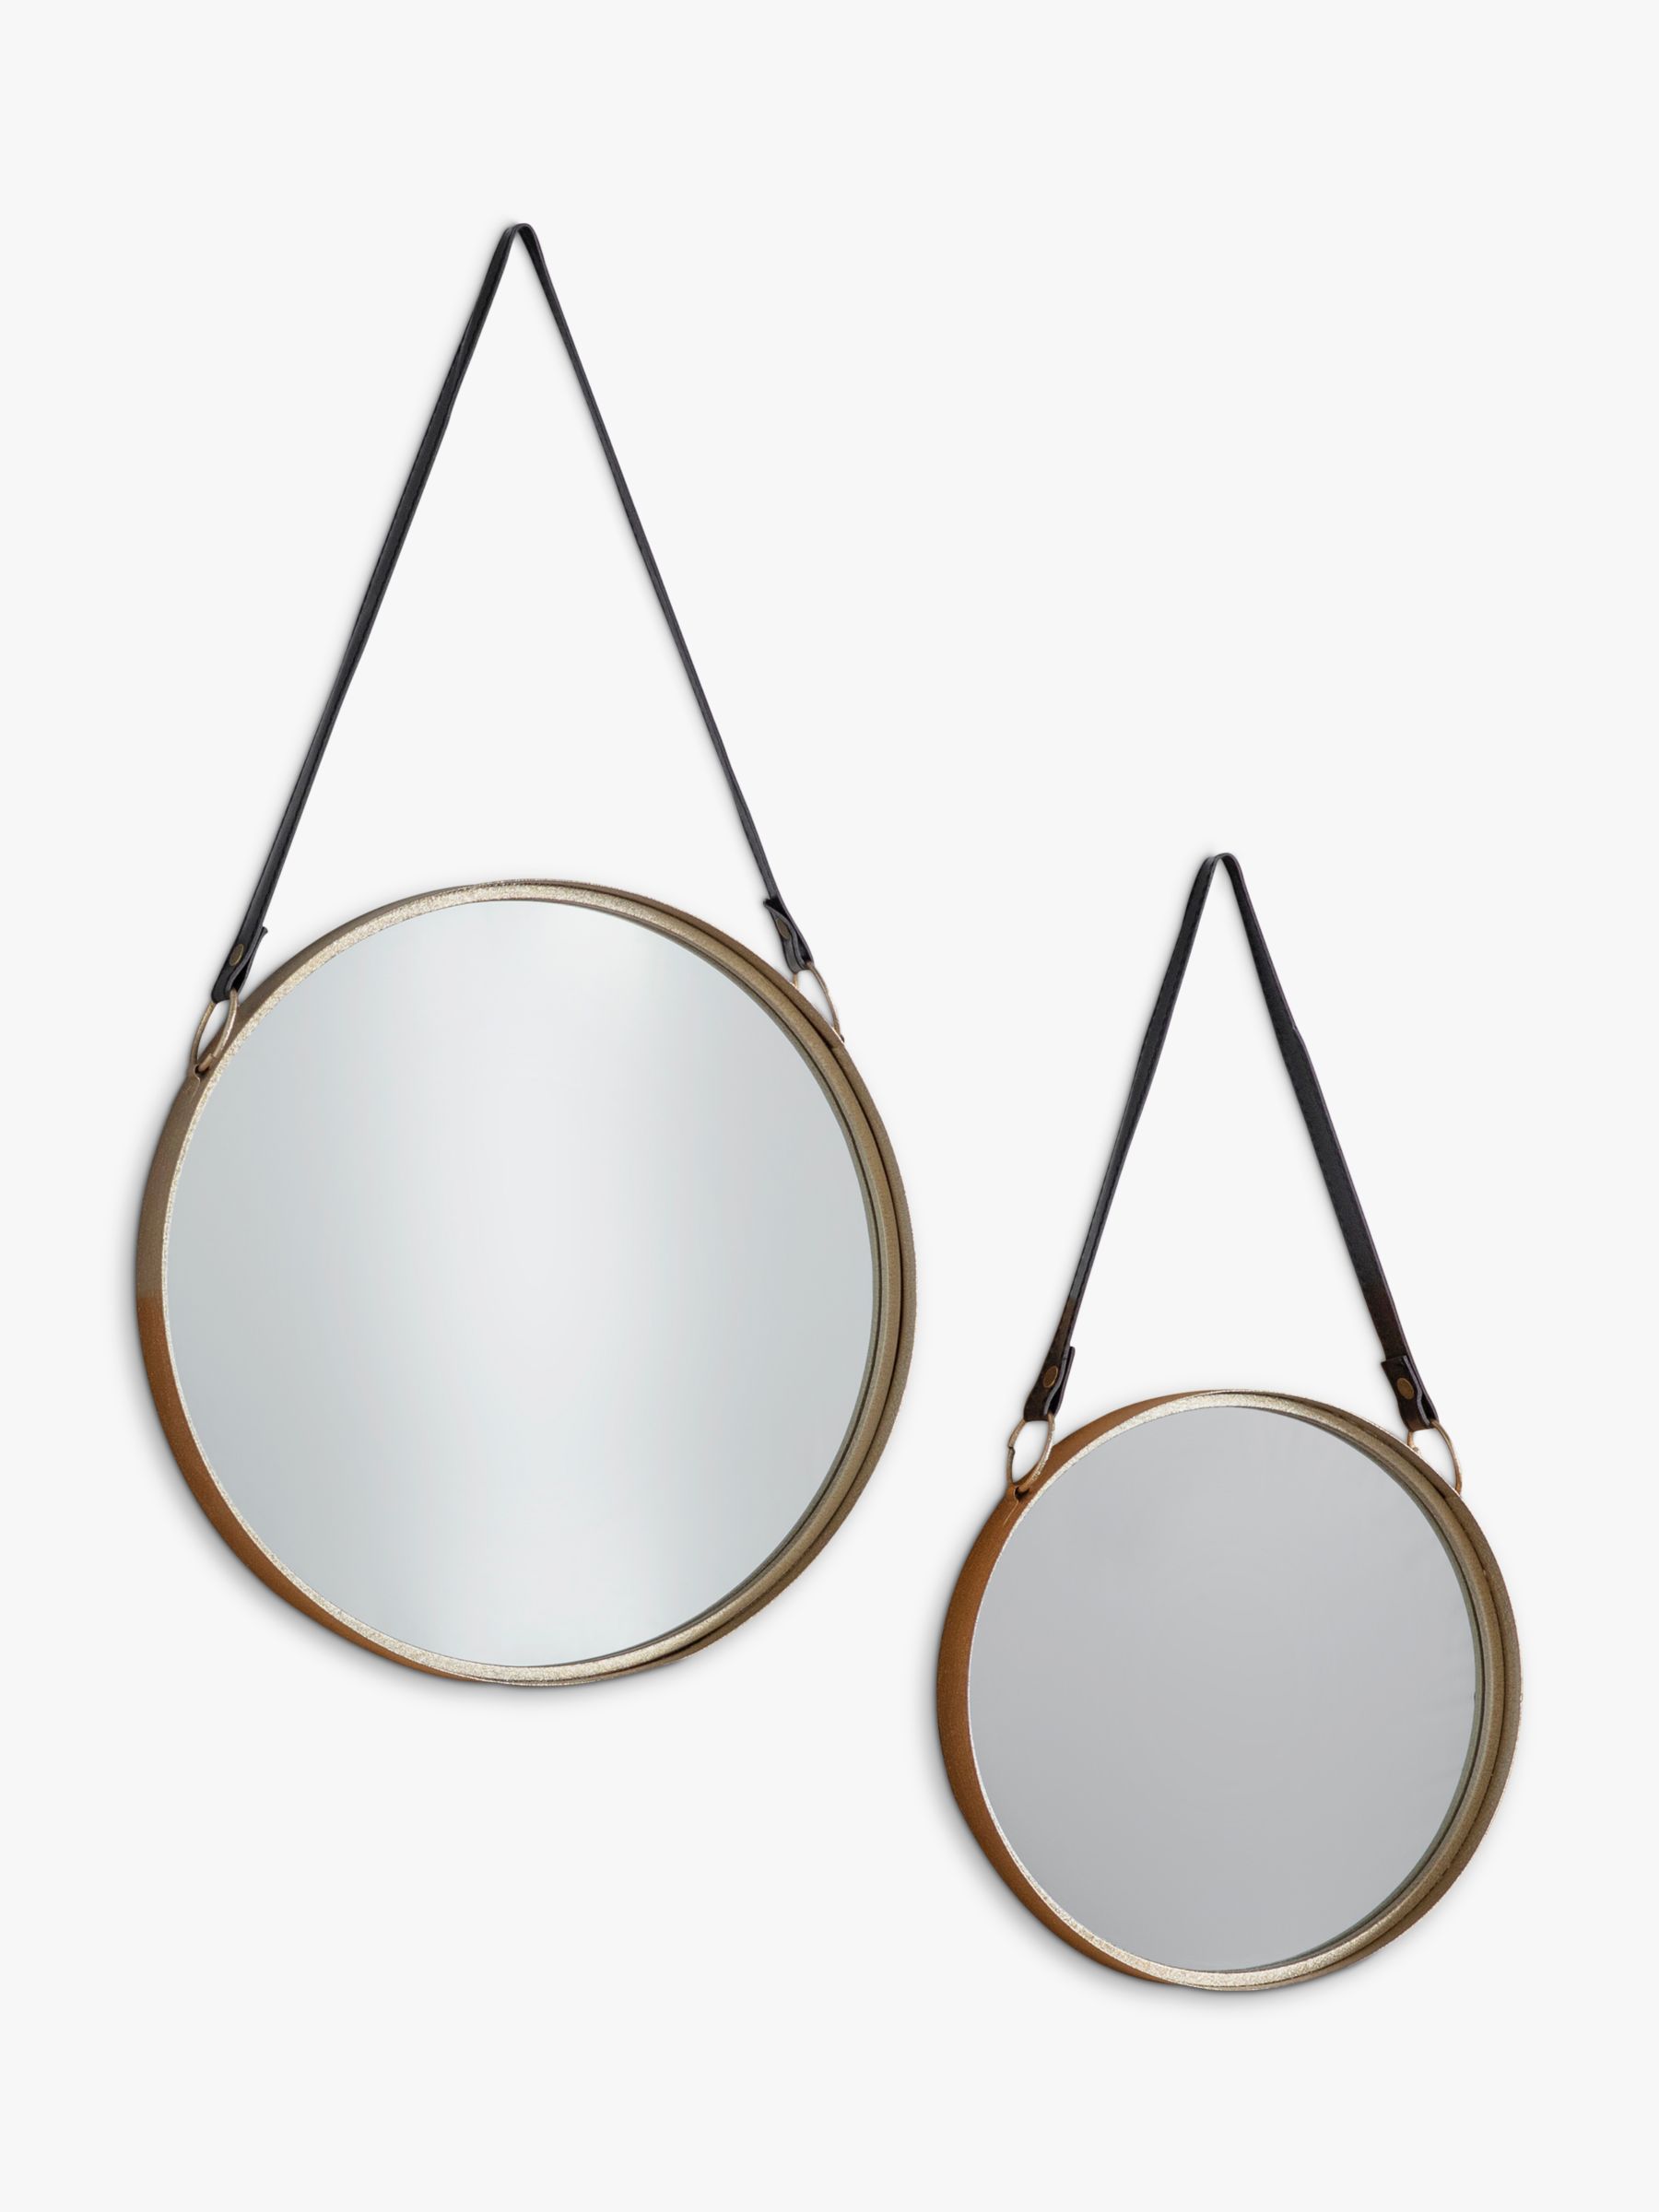 Marston Round Metal Frame Hanging, Round Hanging Mirror With Leather Strap